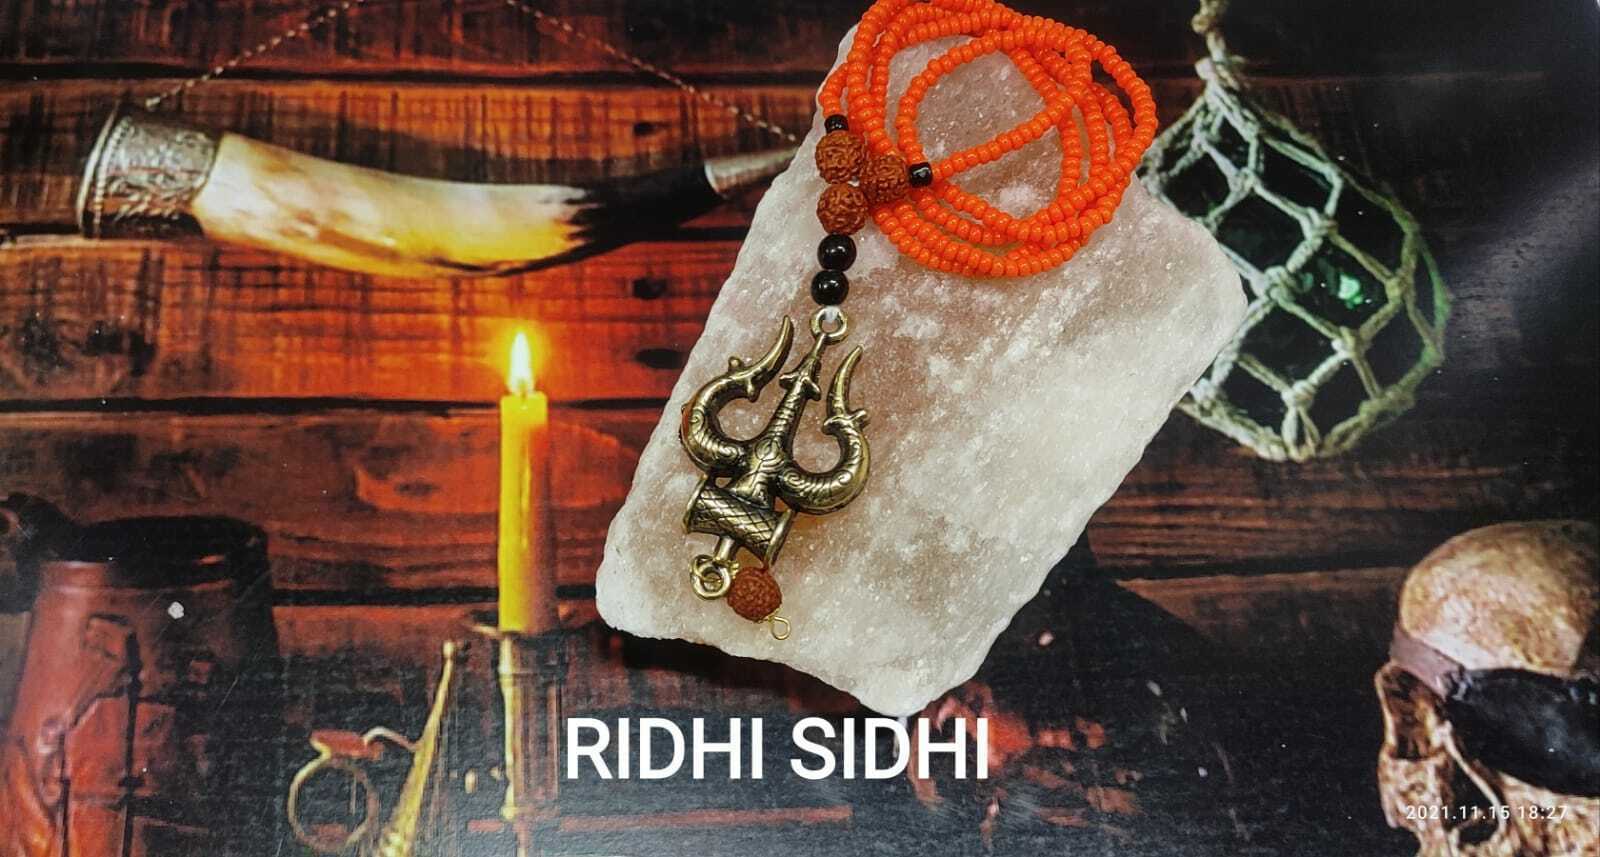 Shiv Tantra Aghori Pendant/ Shiv Shakti Pendant Luck, Wishes, Lust Come True